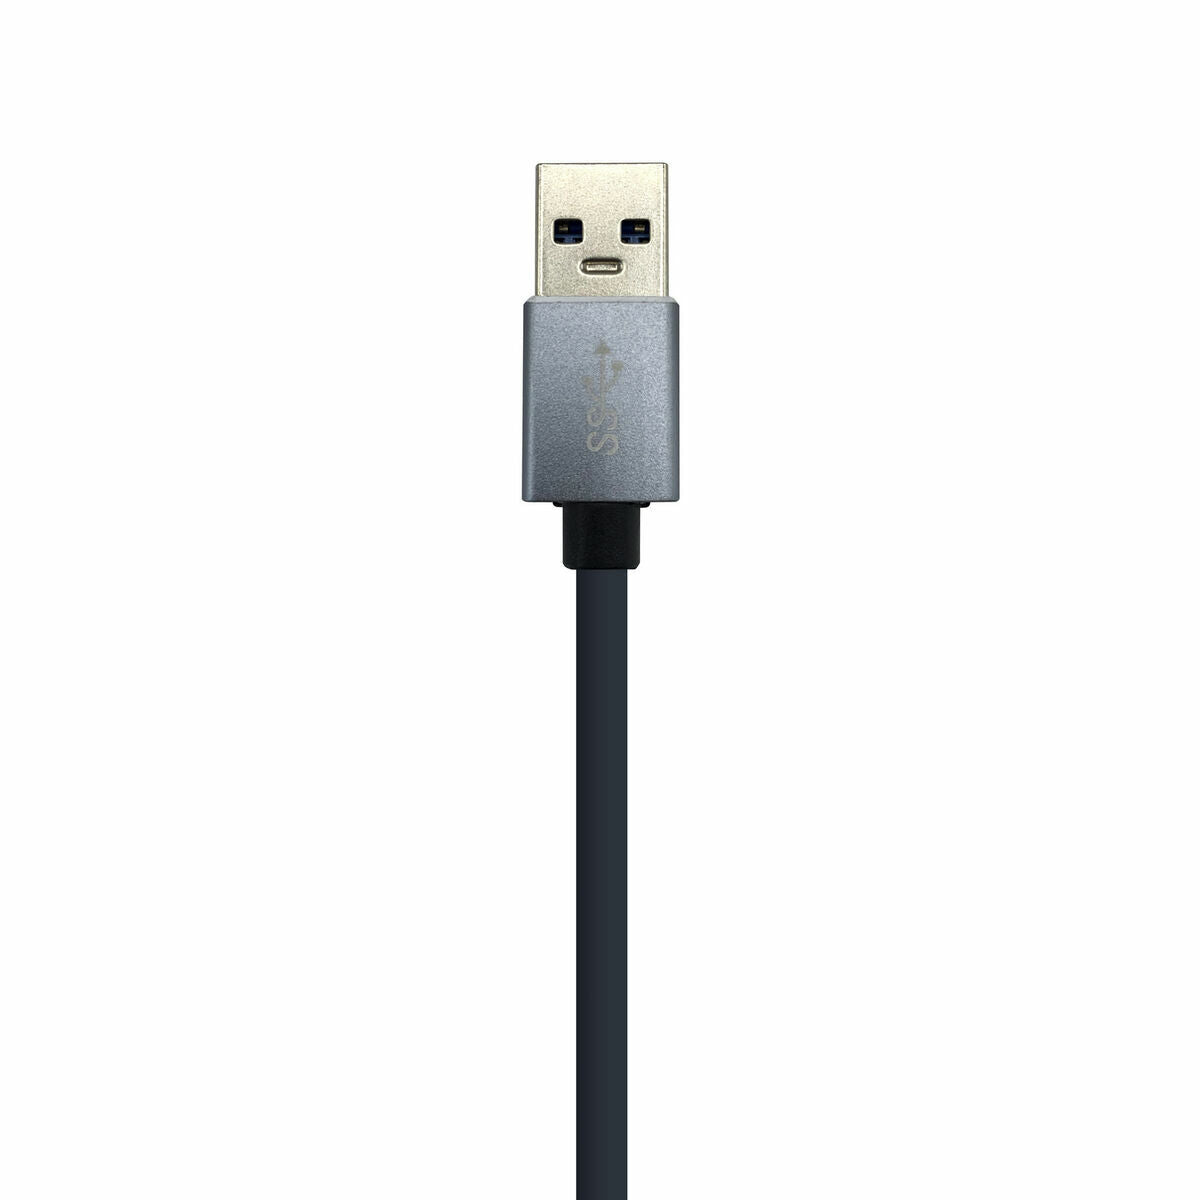 USB Hub Aisens Conversor USB 3.0 a ethernet gigabit 10/100/1000 Mbps + Hub 3 x USB 3.0, Gris, 15 cm